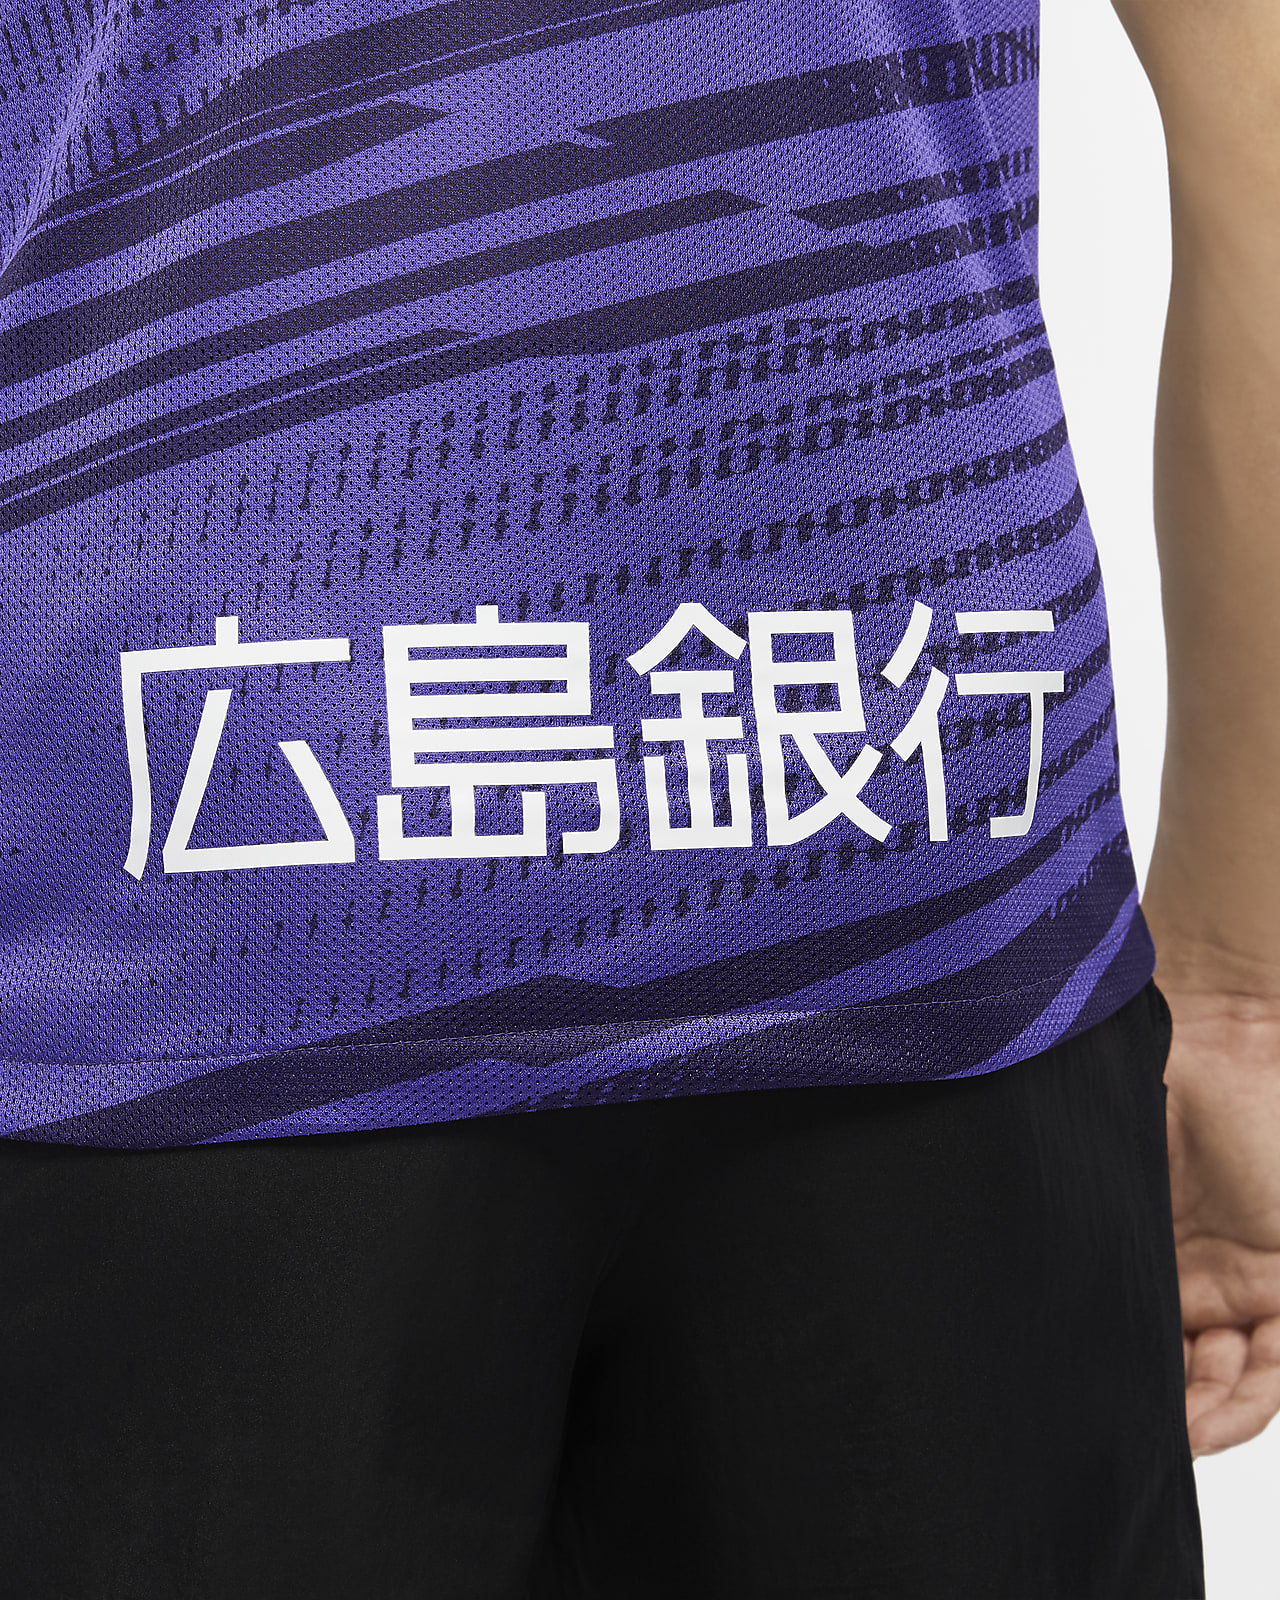 Nike公式 サンフレッチェ広島 ホーム メンズ サッカーユニフォーム オンラインストア 通販サイト